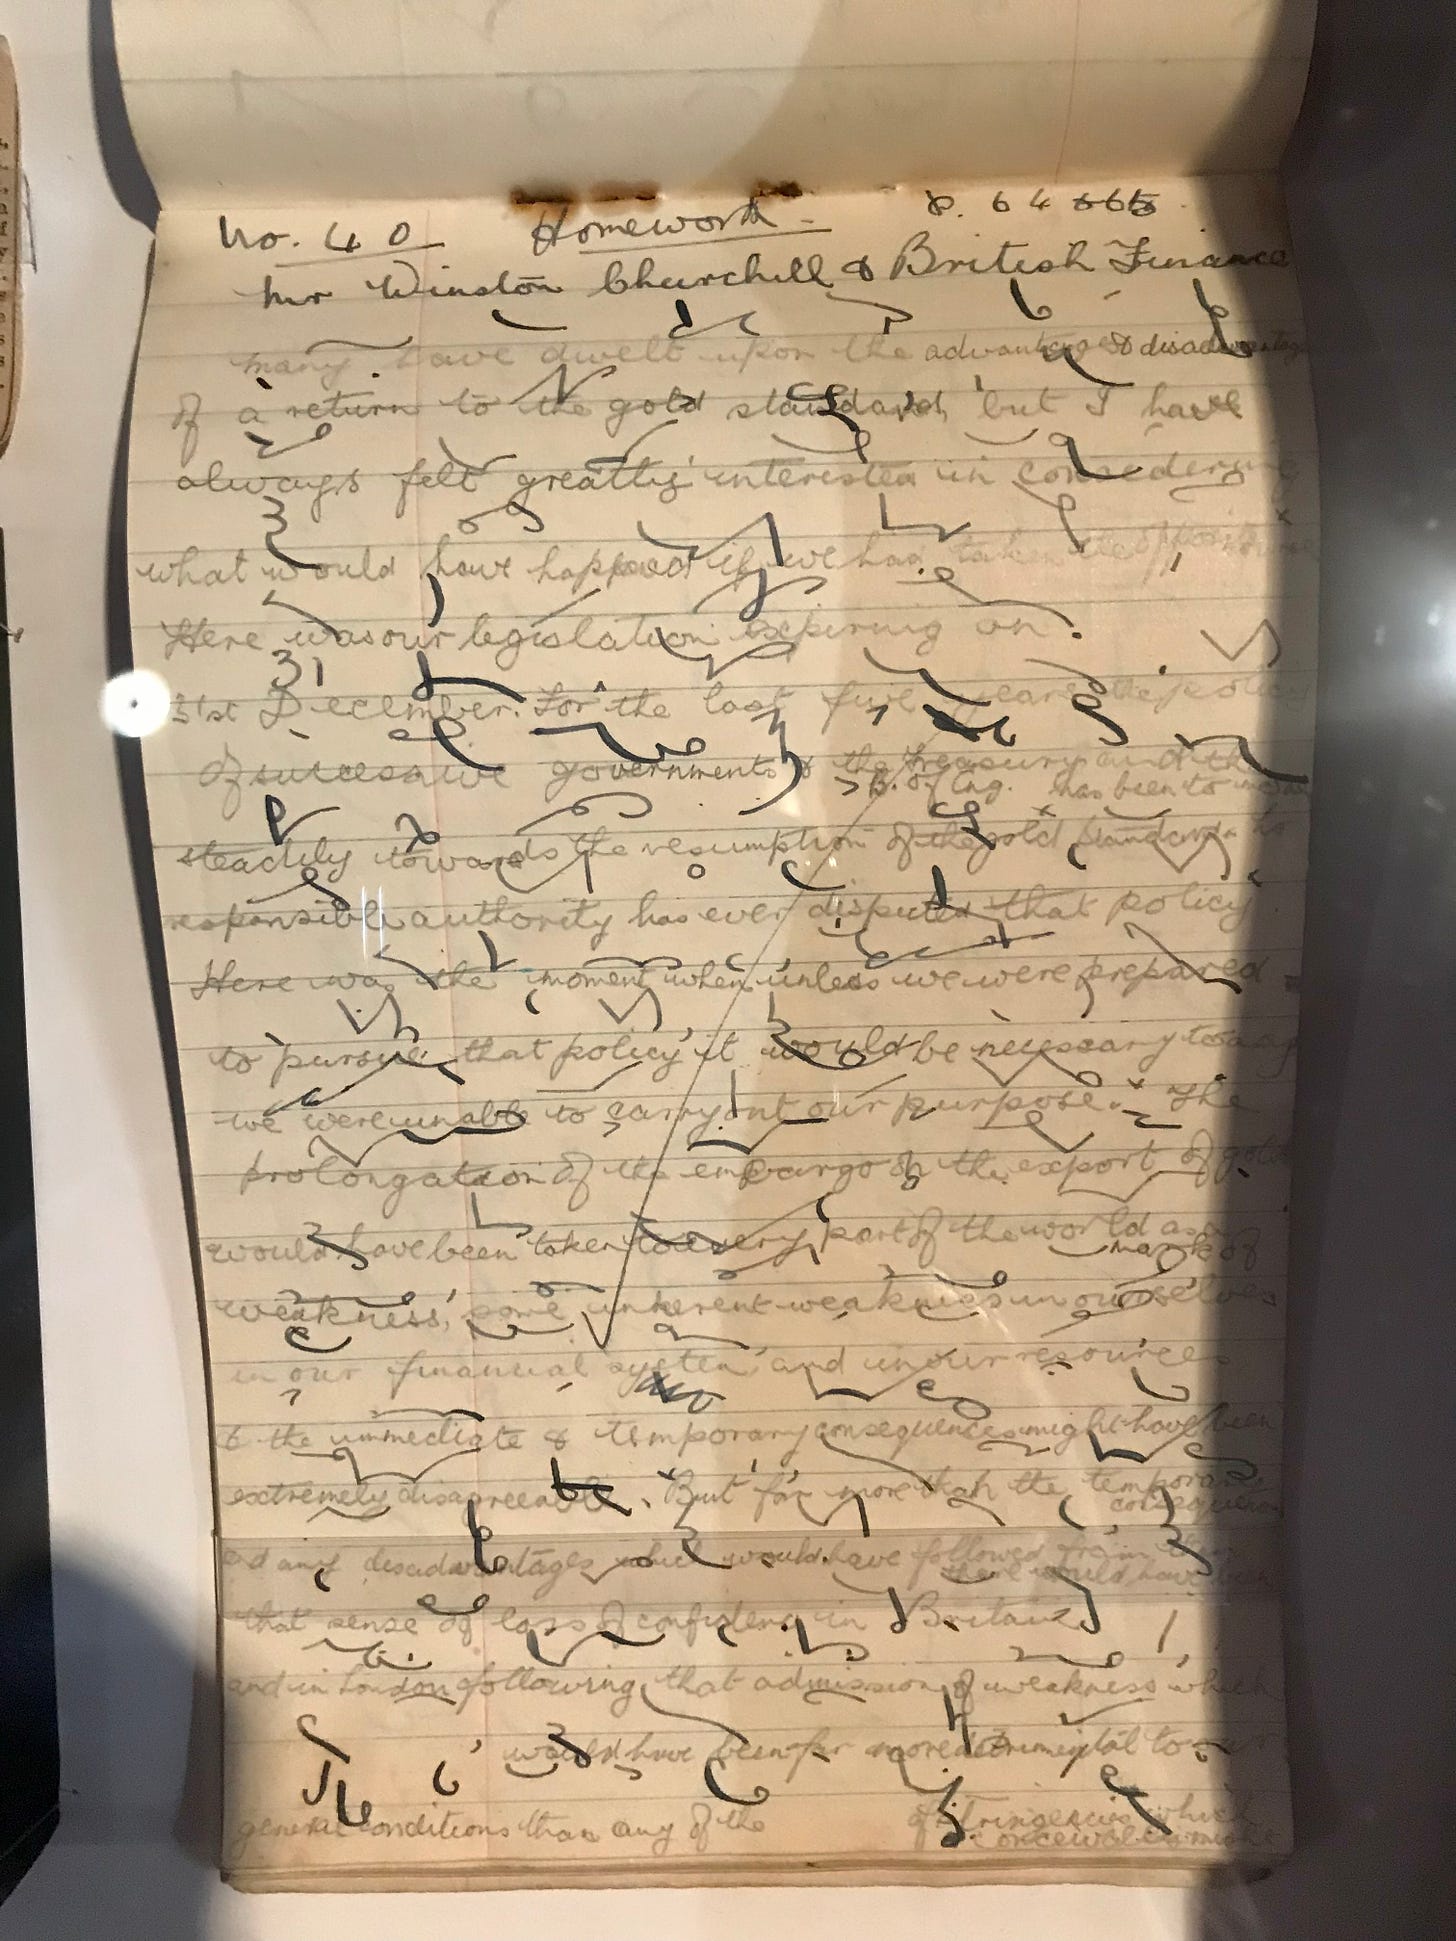 Pitman shorthand notebook in Trowbridge Museum